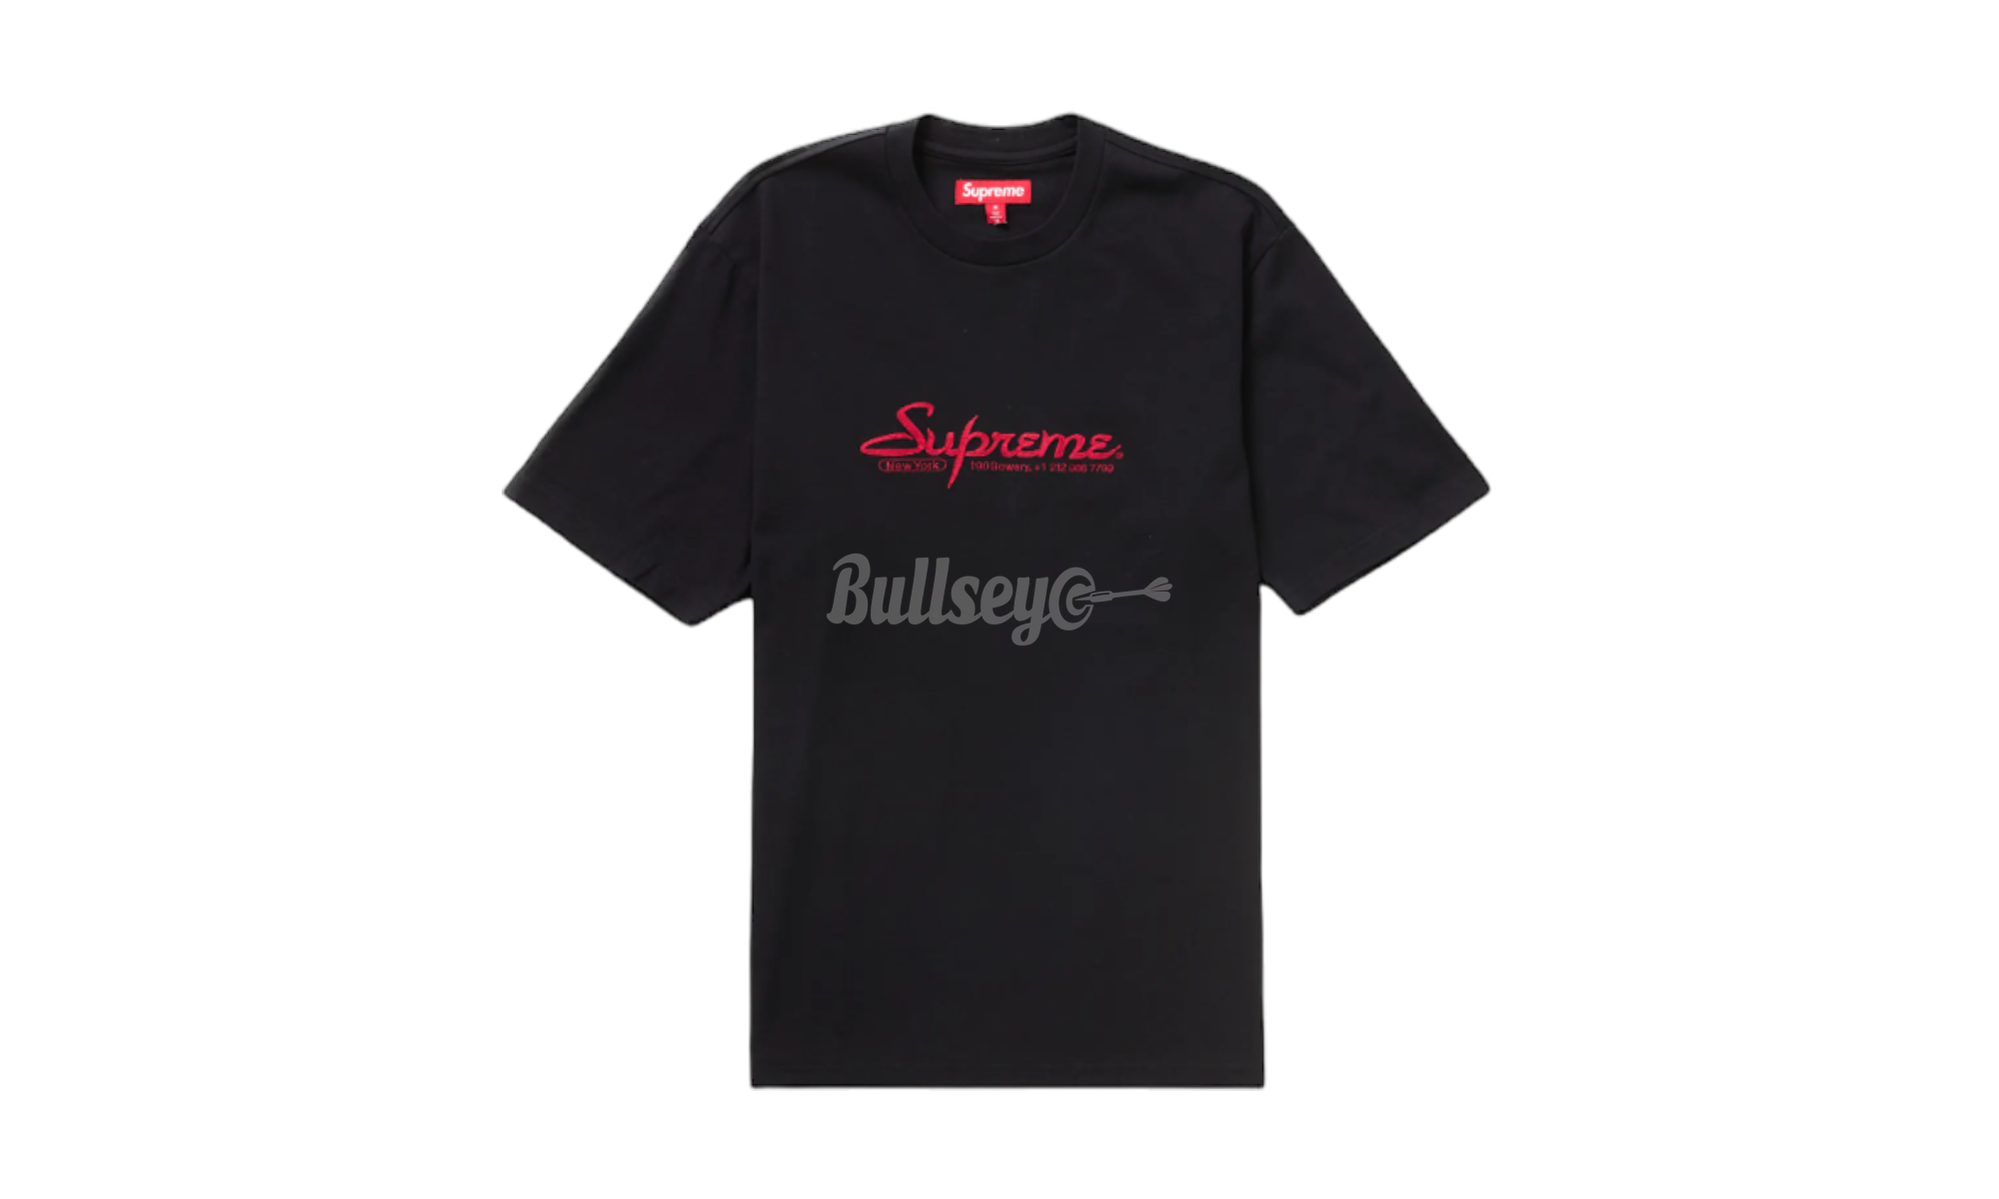 NTWRK - Supreme Contact S/S Top Black T-Shirt